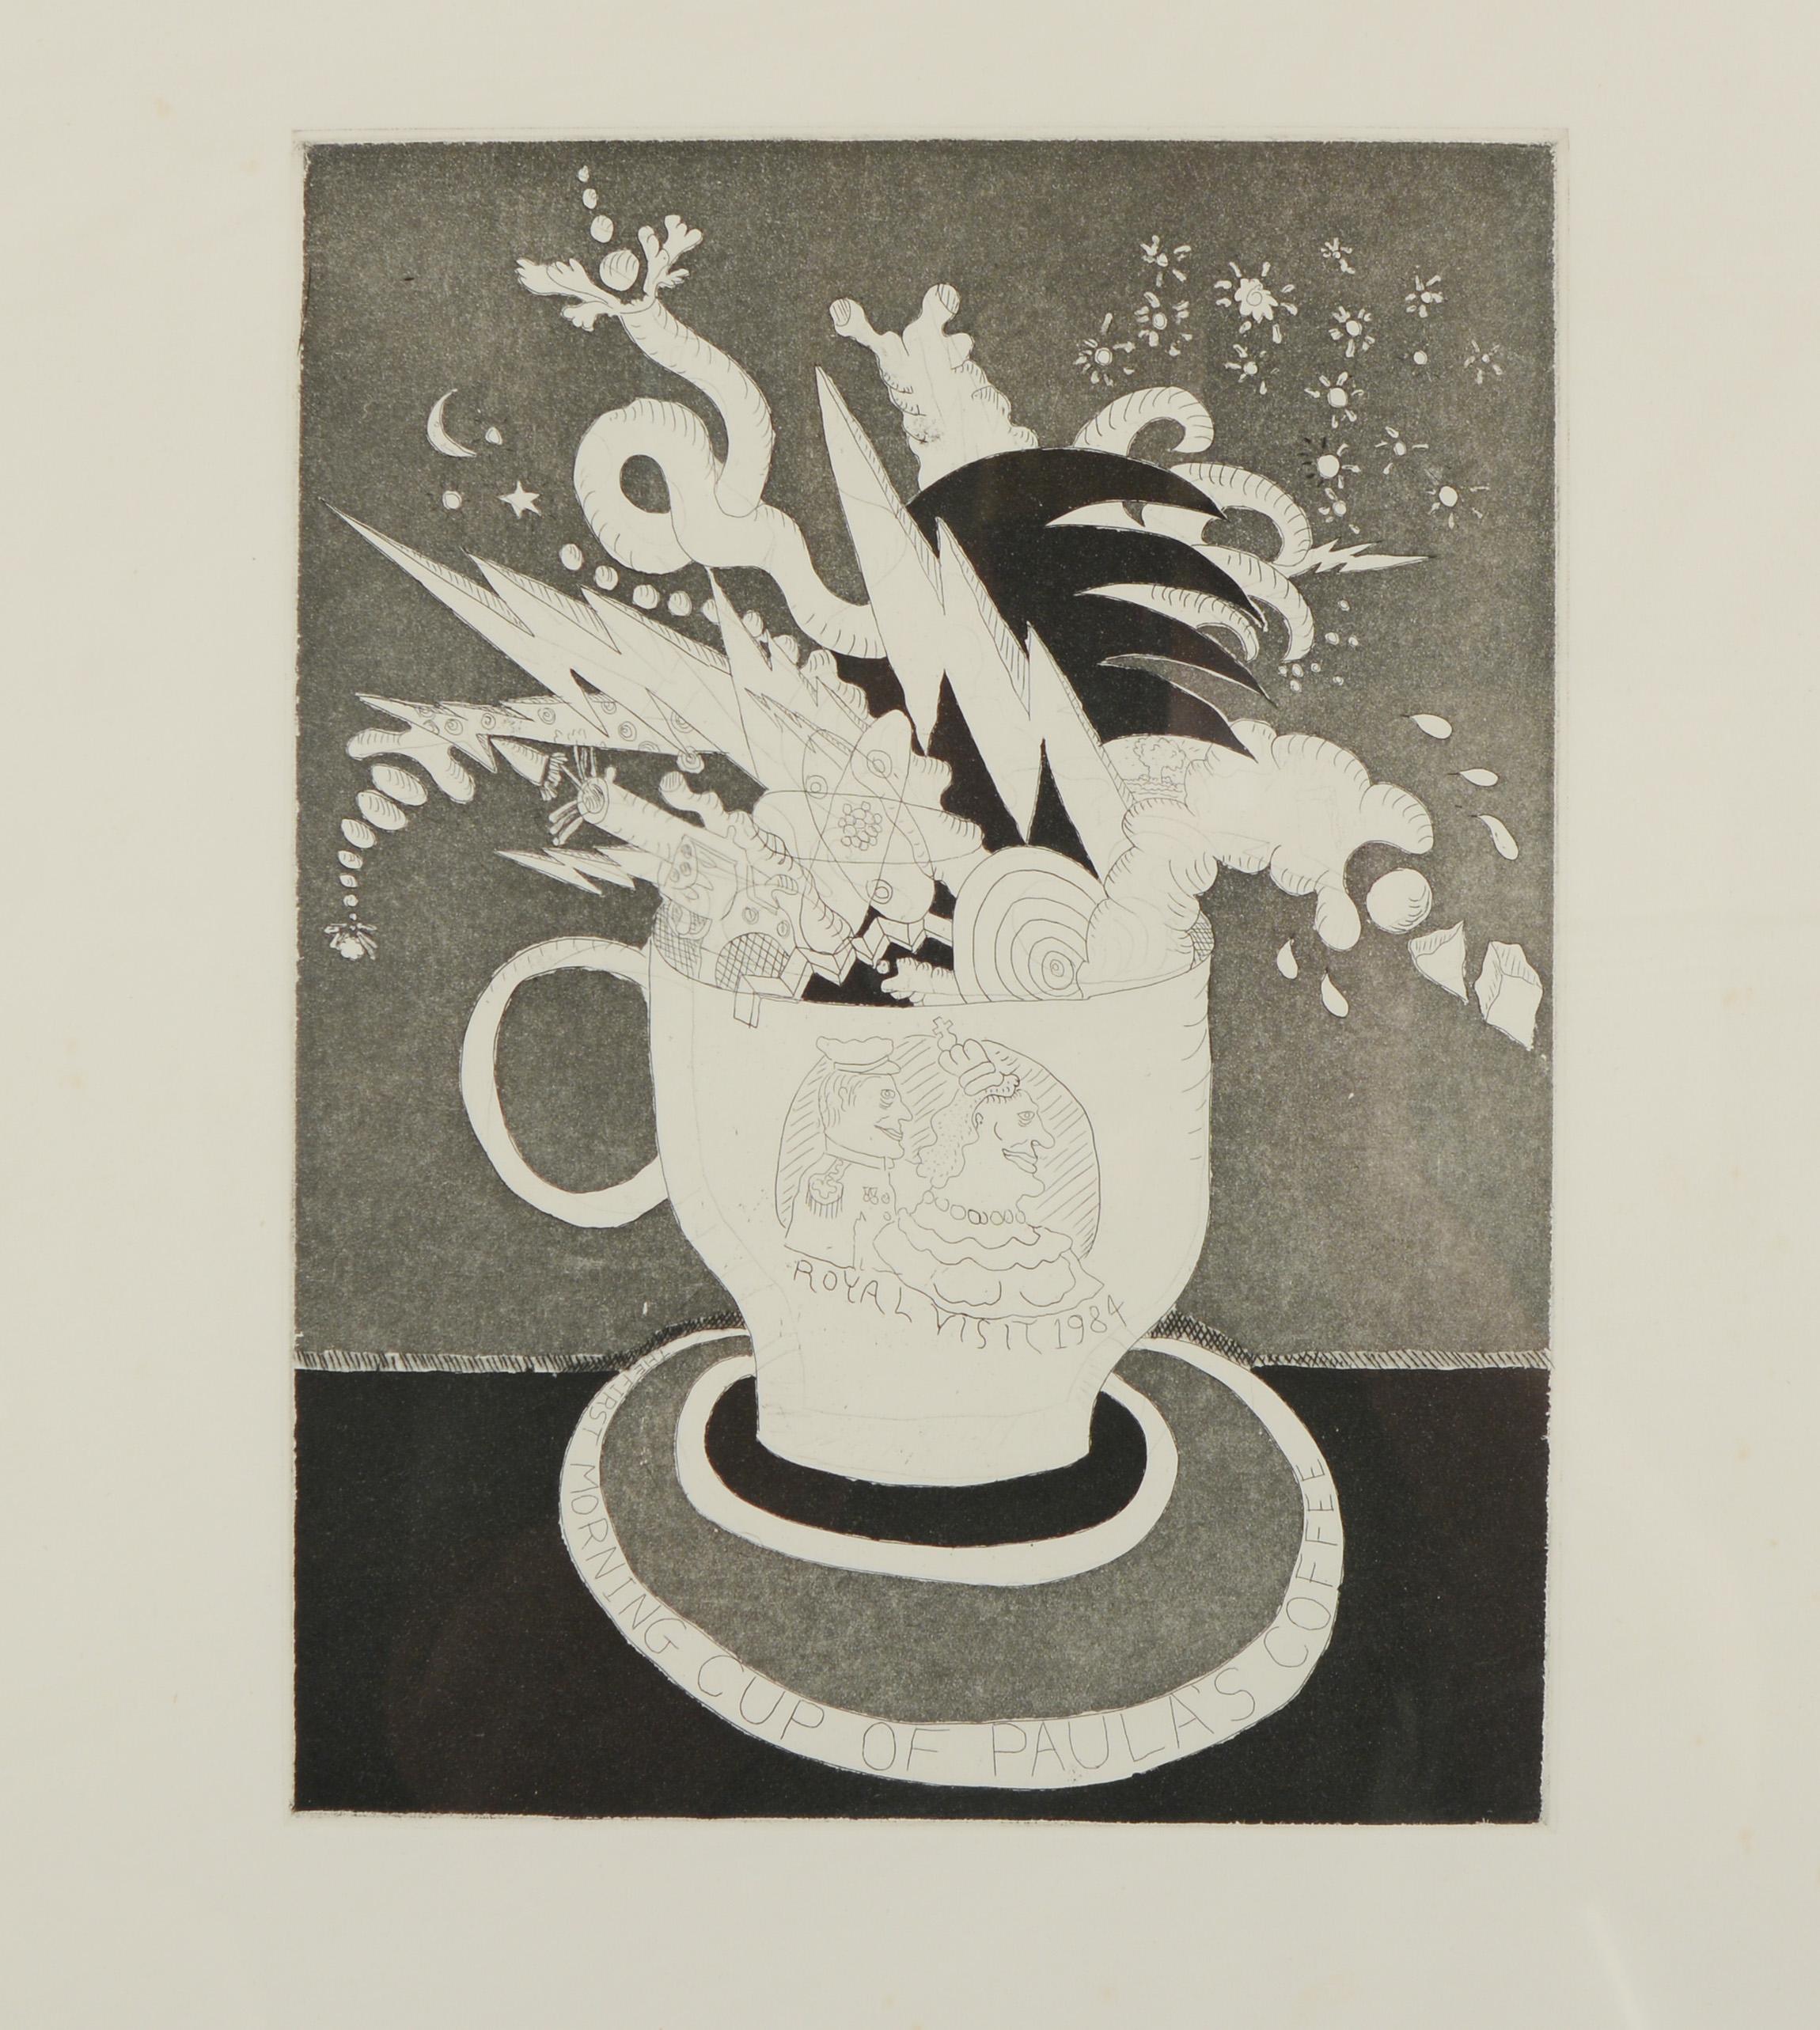 Américain Impression « The First Morning Cup of Paula's Coffee » (La première tasse de café de Paula) de David Gilhooly en vente